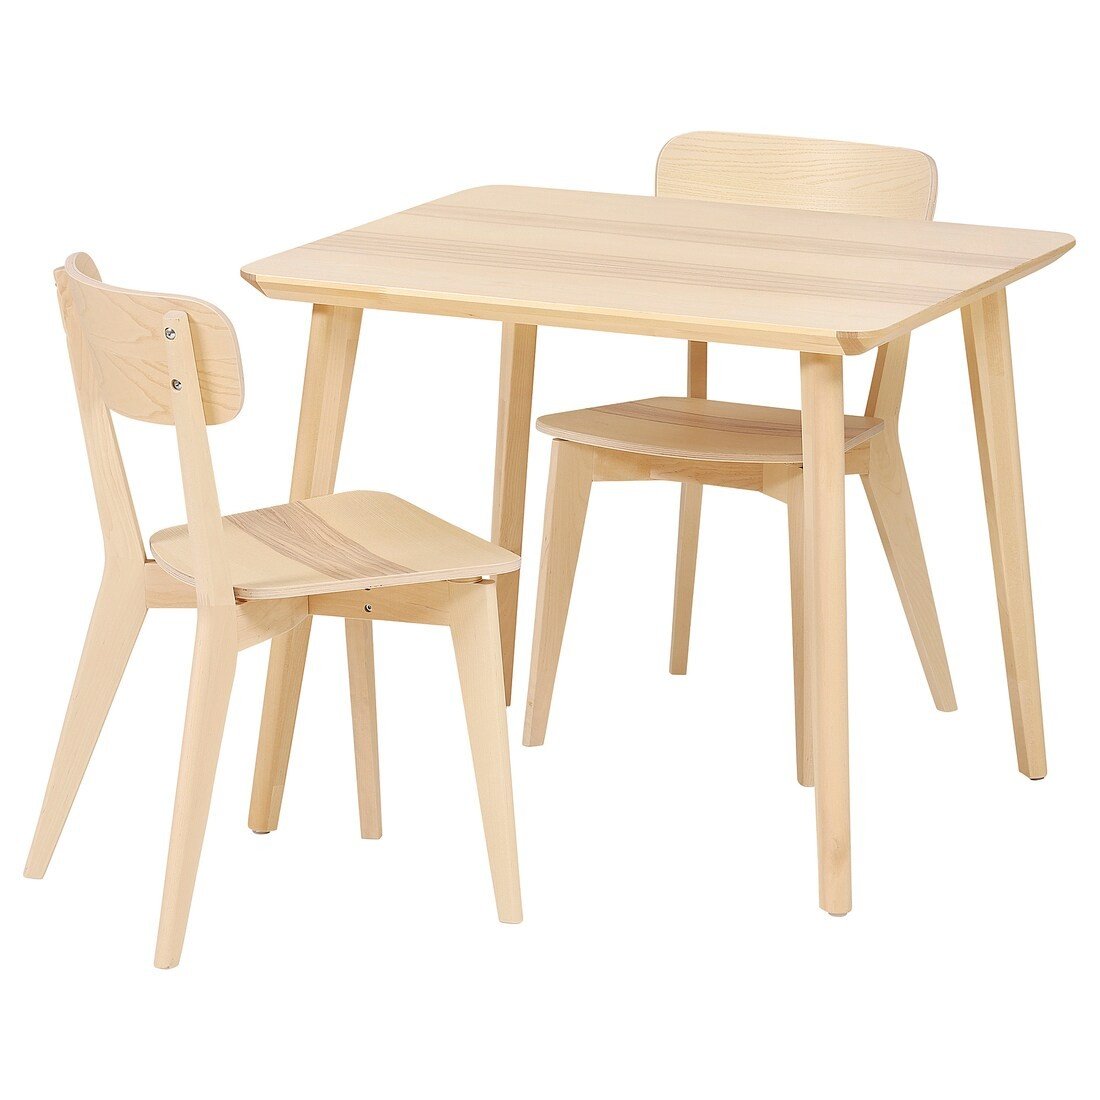 LISABO / LISABO Стол и 2 стула, ясеневый шпон/ясеневый шпон, 88 см